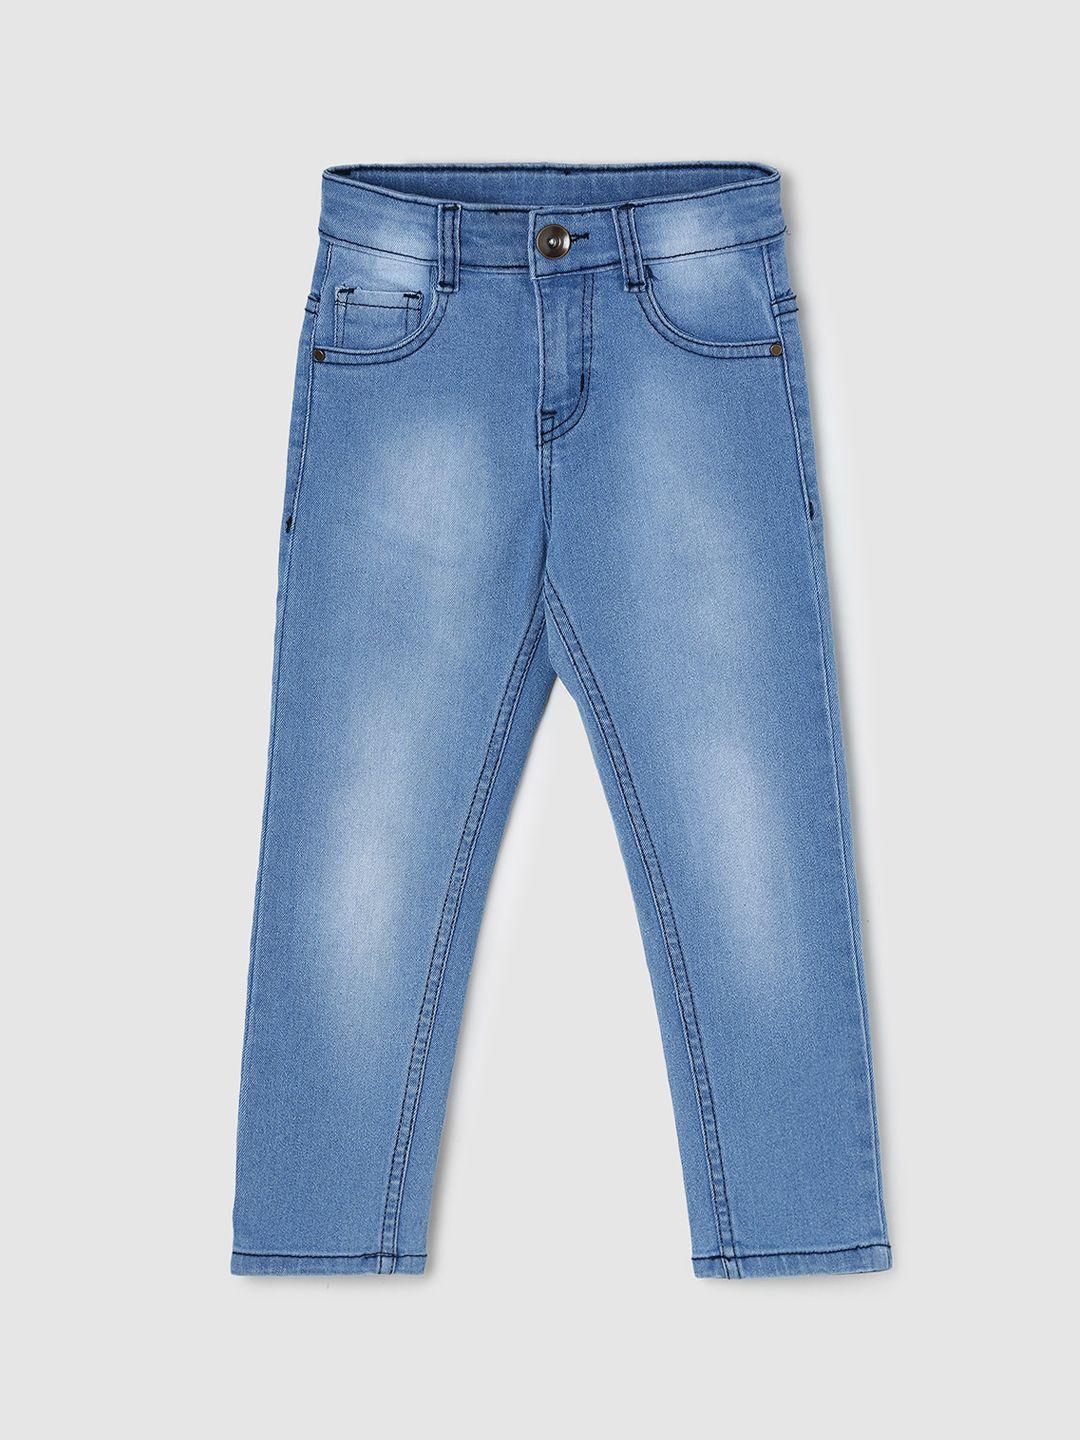 max-boys-blue-light-fade-cotton-jeans